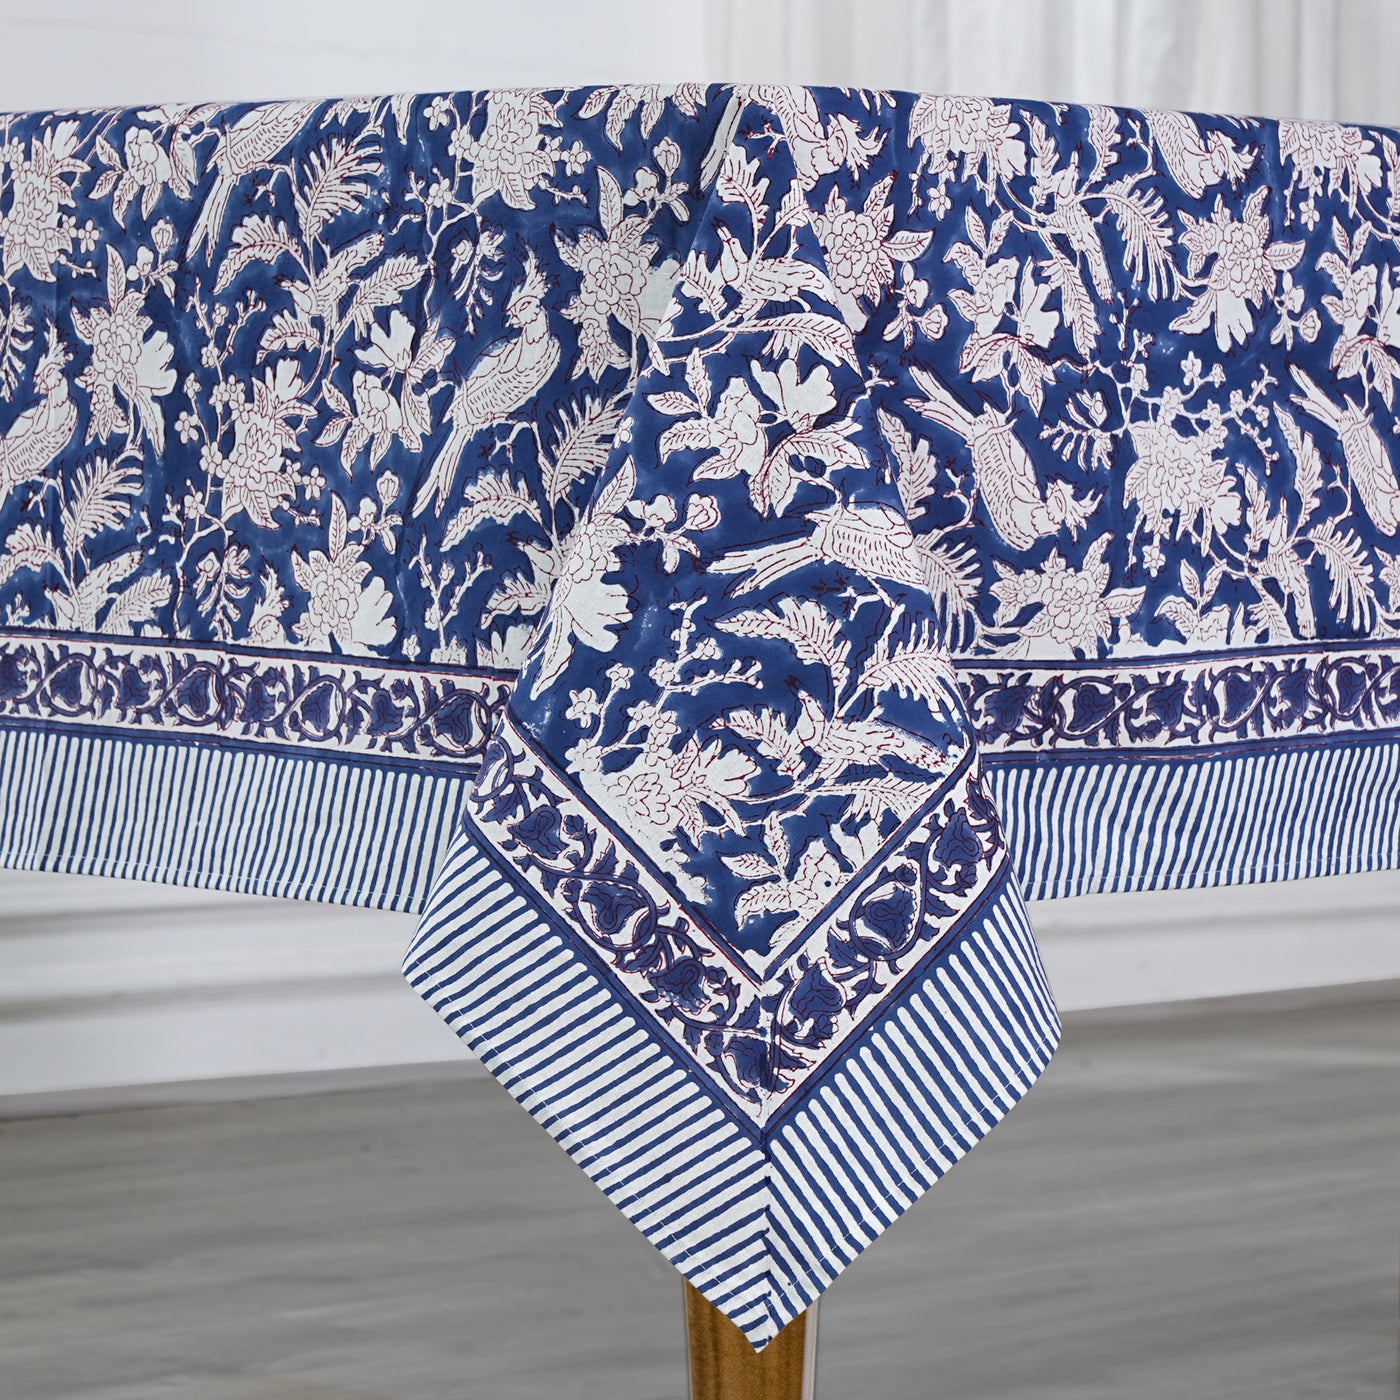 FABRICRUSH Dark Royal Blue Rectangle 100% Cotton Hand Block Print Tablecloth Washable Halloween Tablecloth (Copy)